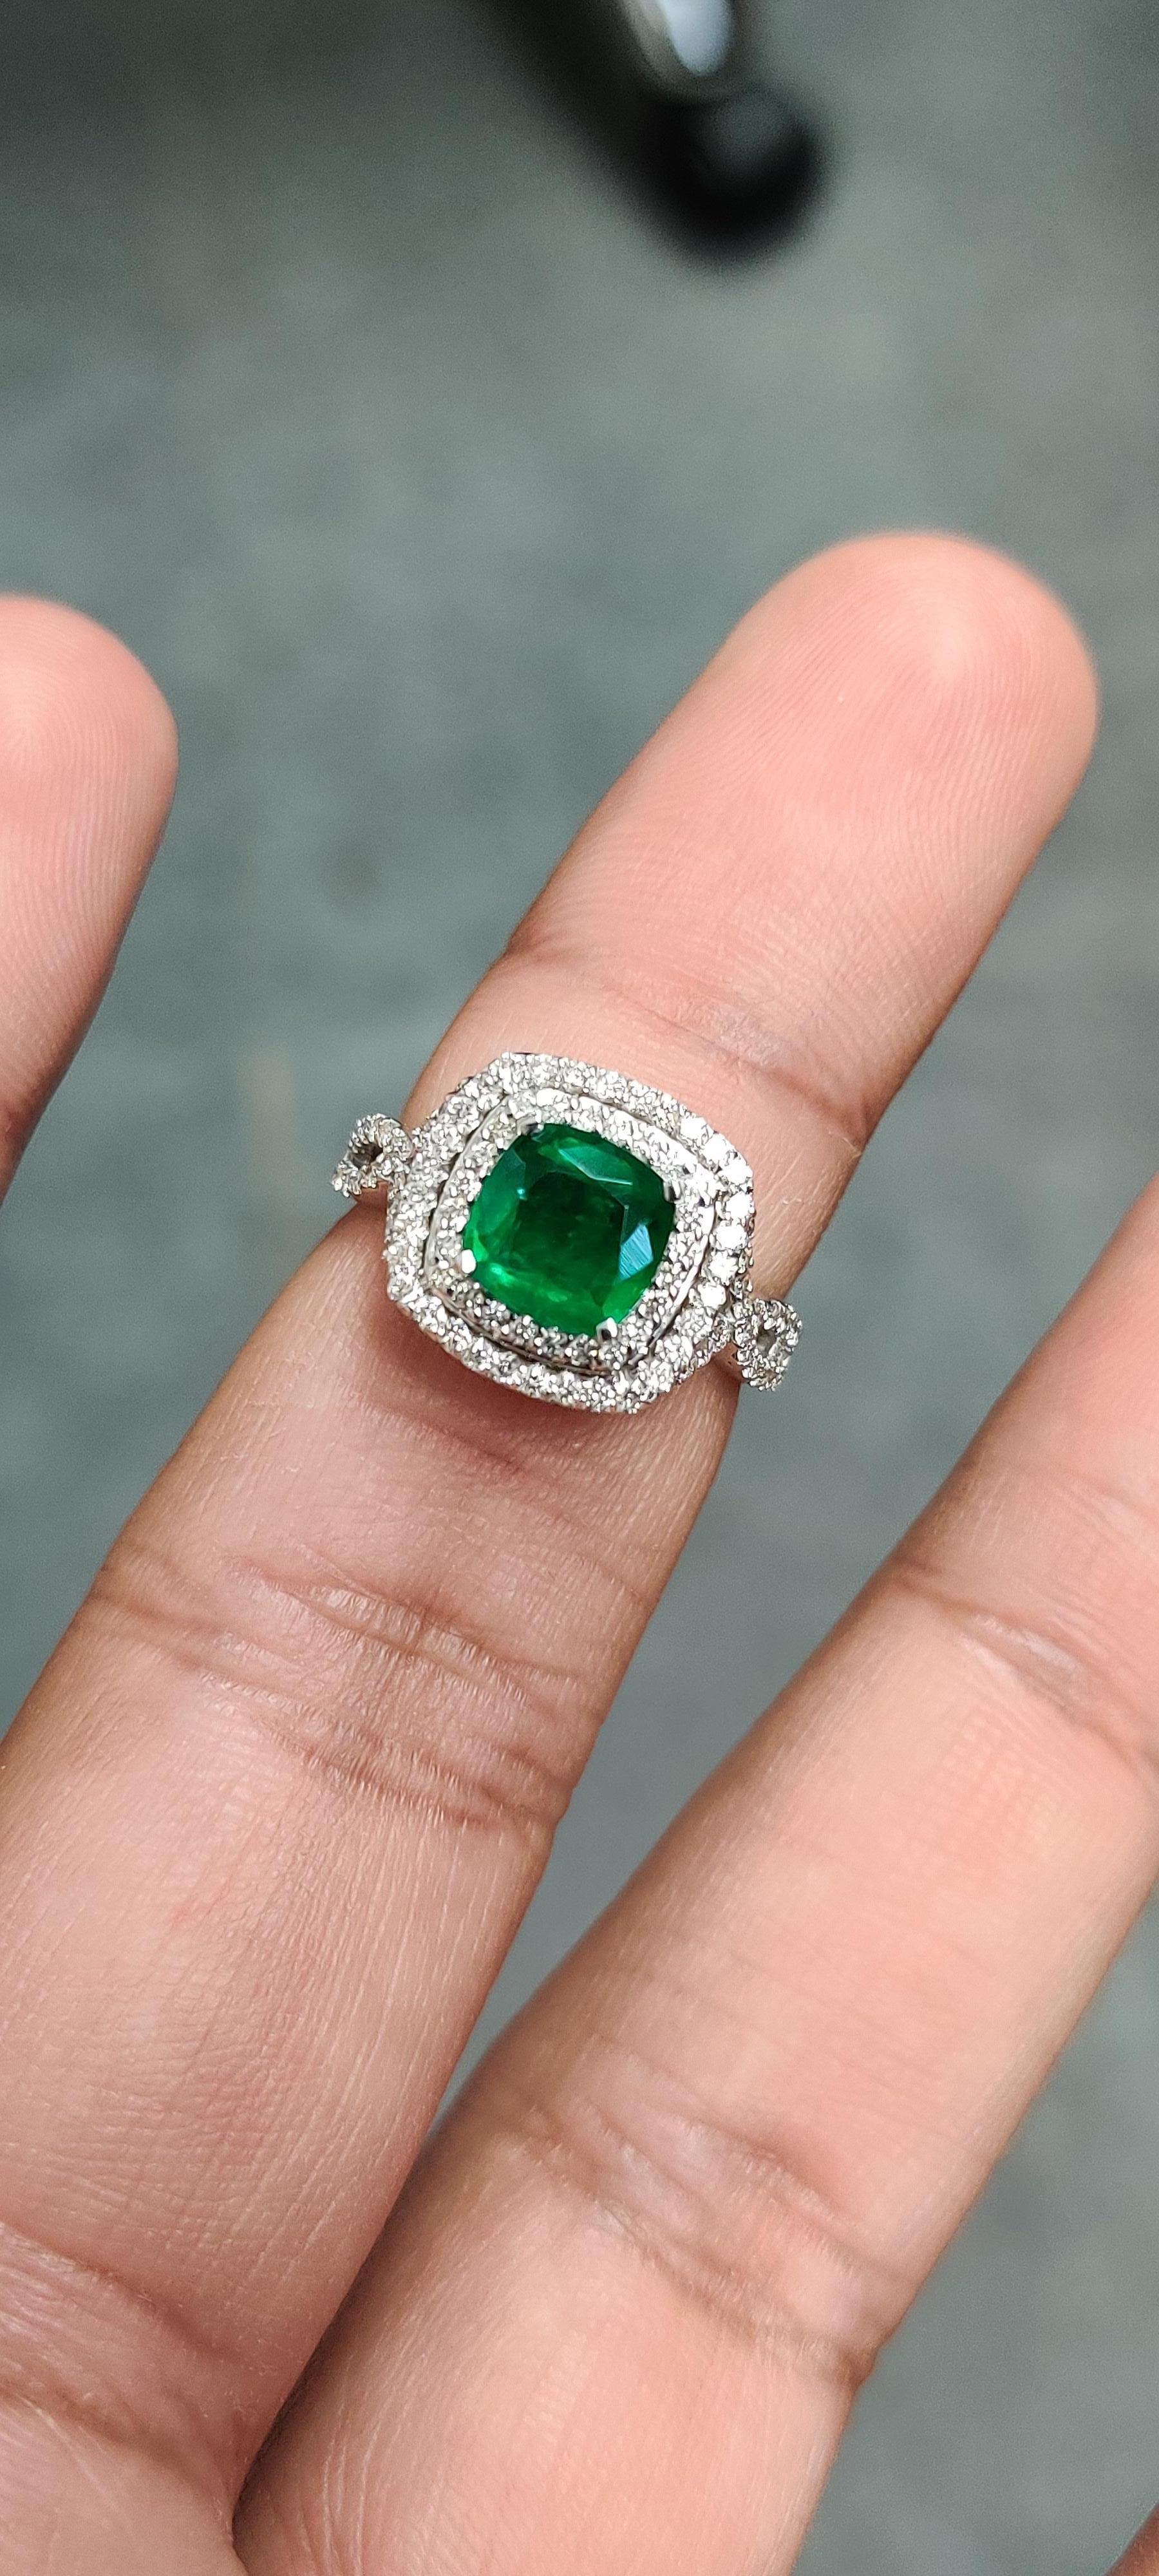 Women's 1.26 Carat Emerald with Halo Diamonds 18K White Gold Ring